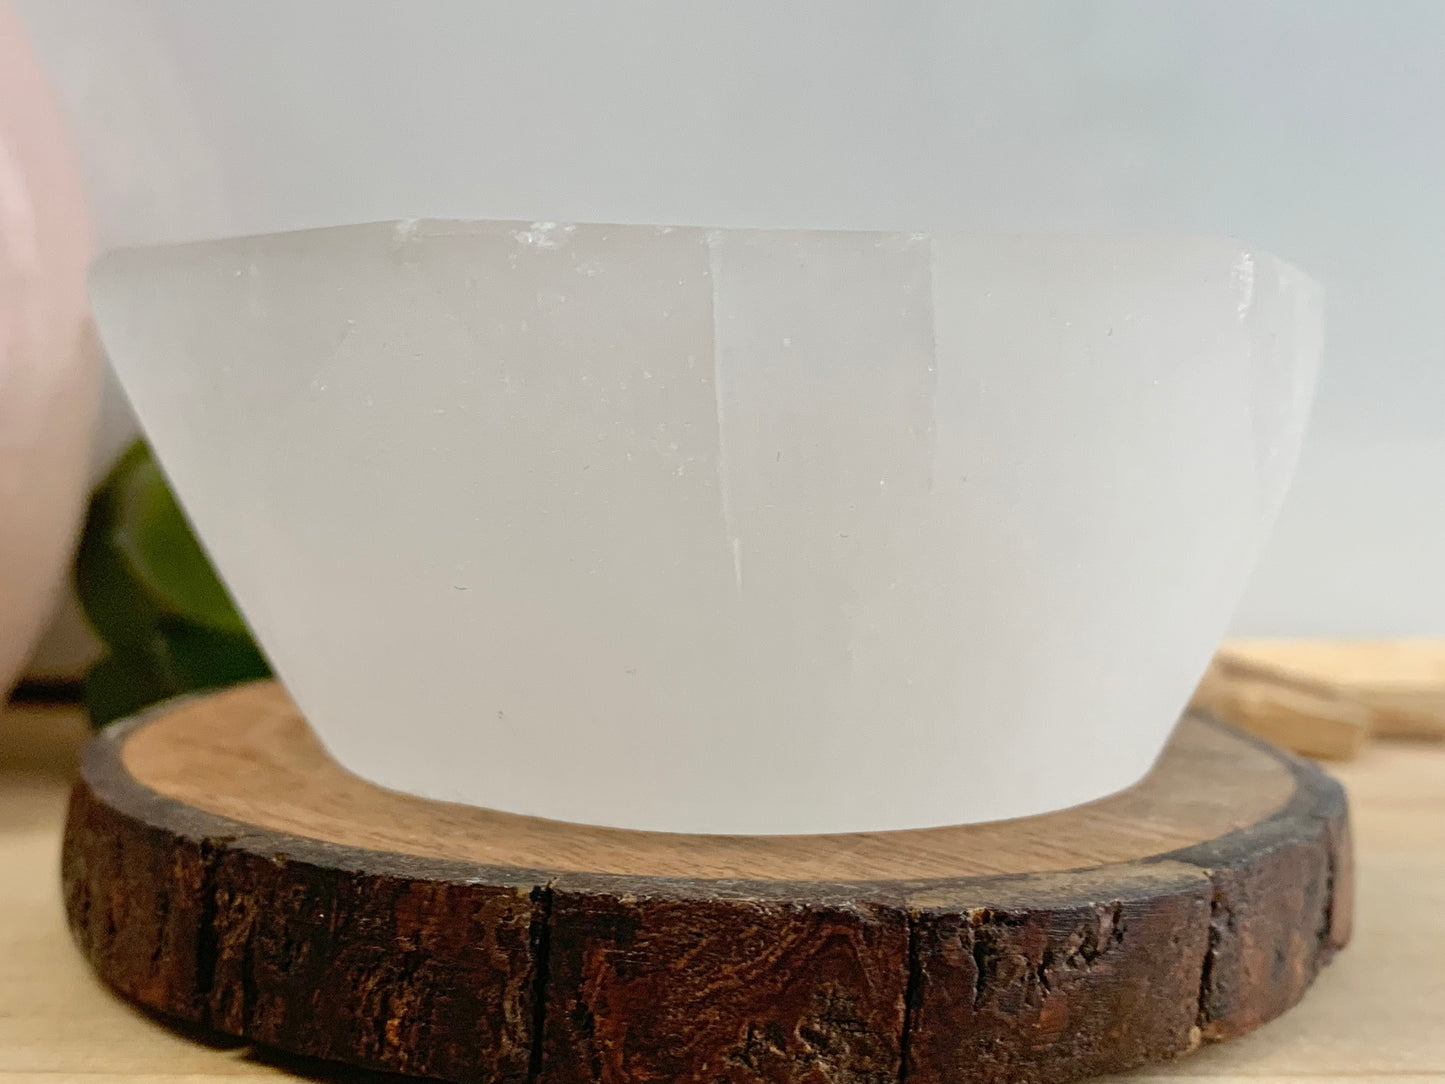 Satin Spar (Selenite) Decorative Hexagon Crystal Dish, Bowl